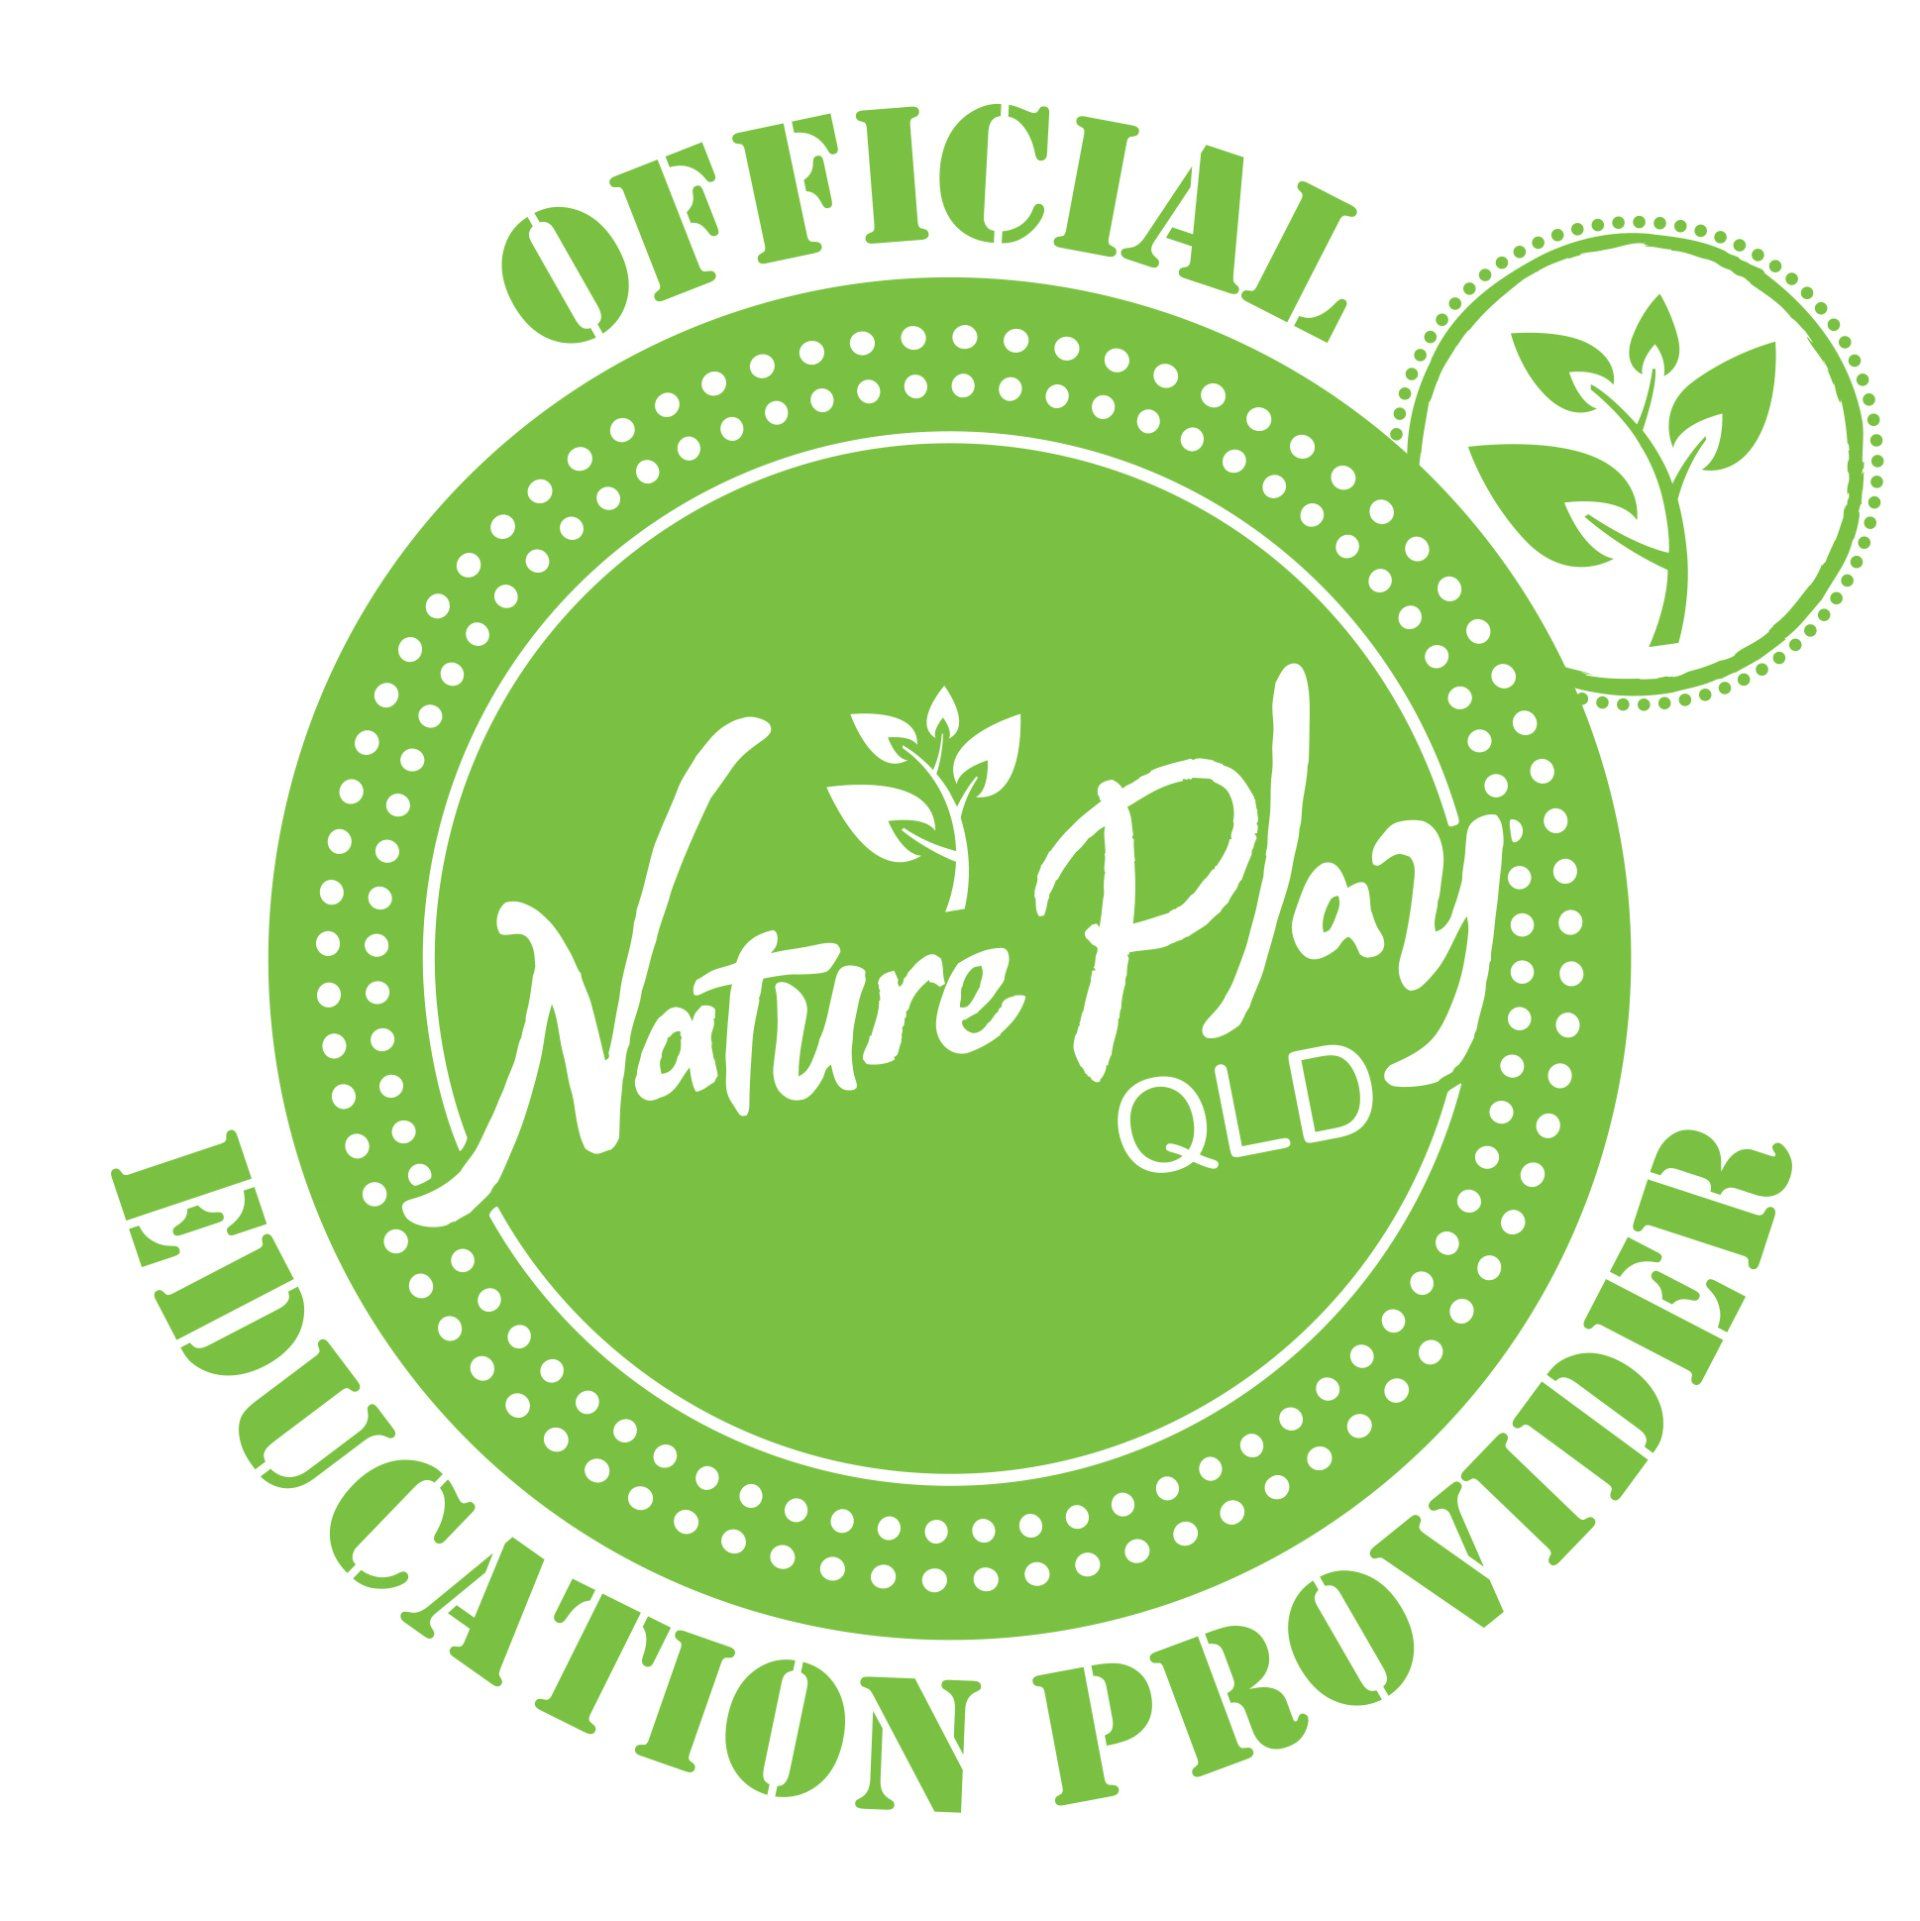 Nature Play logo